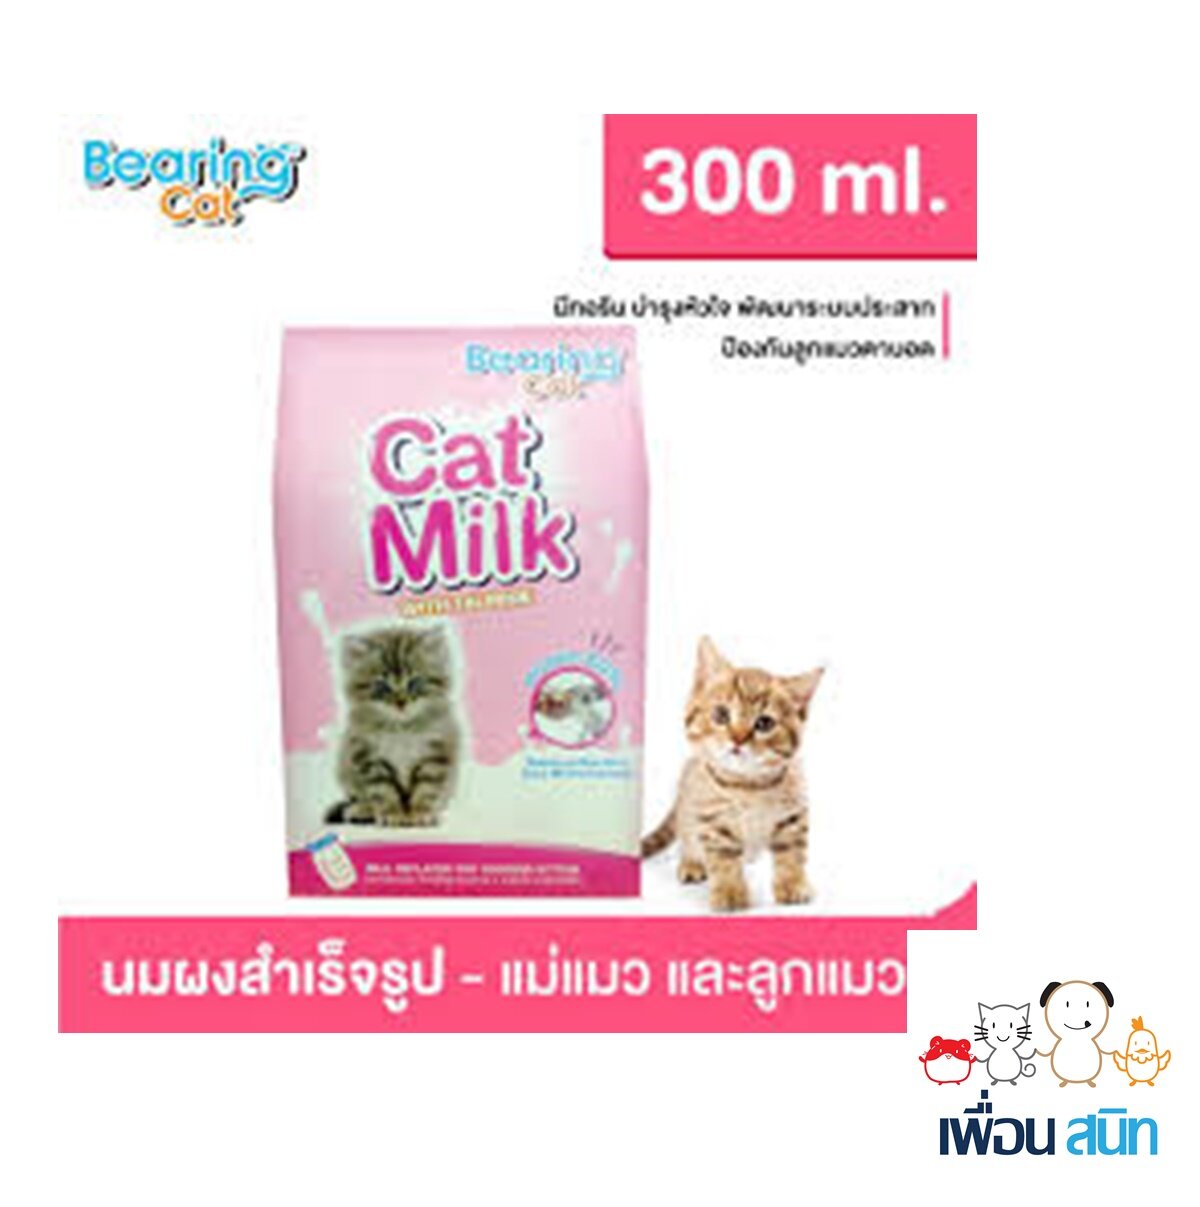 Bearing Cat Milk with Taurine นมผงสำเร็จรูปสำหรับลูกแมว ขนาด 300g.